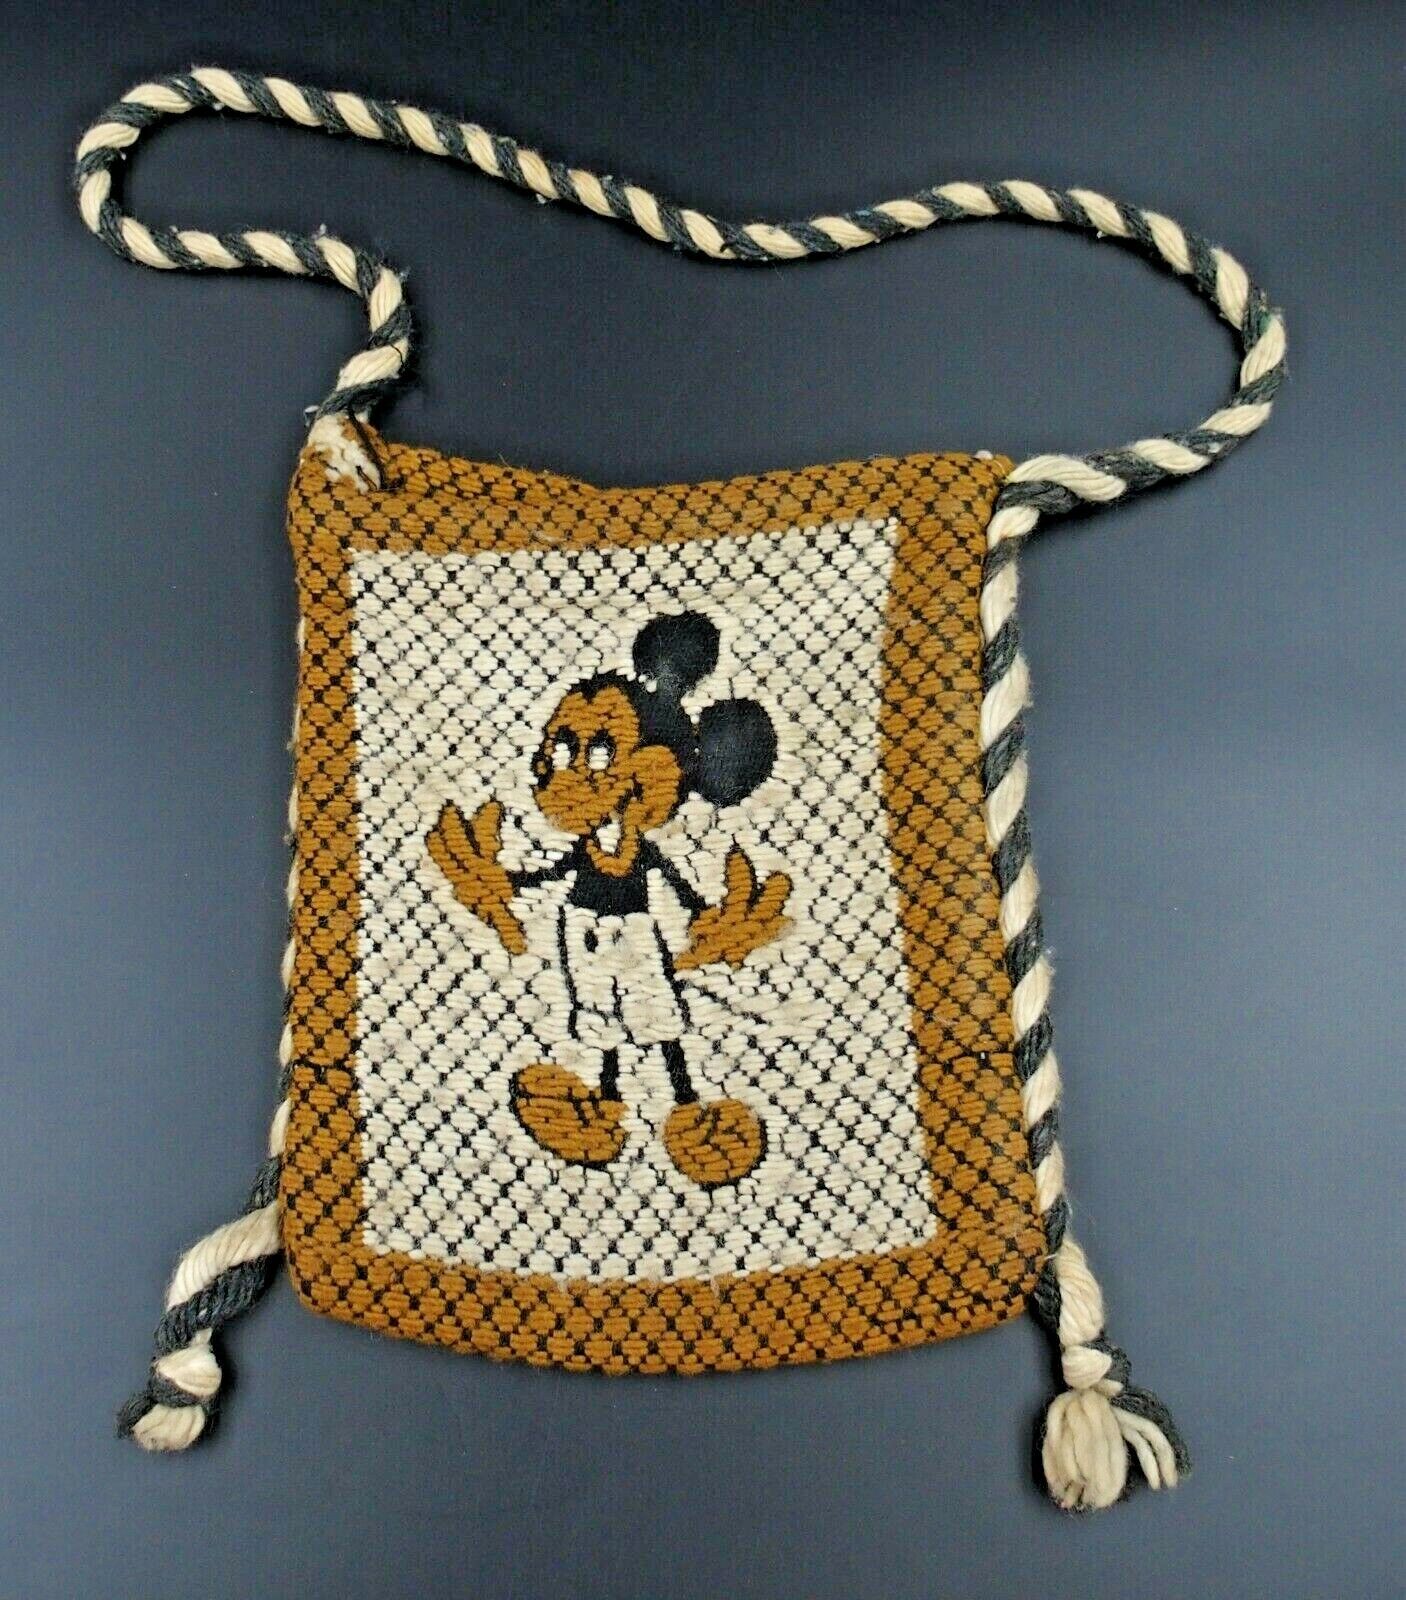 Vintage 1960's or 1970's Handmade Mickey Mouse Handbag Purse Shoulder Bag